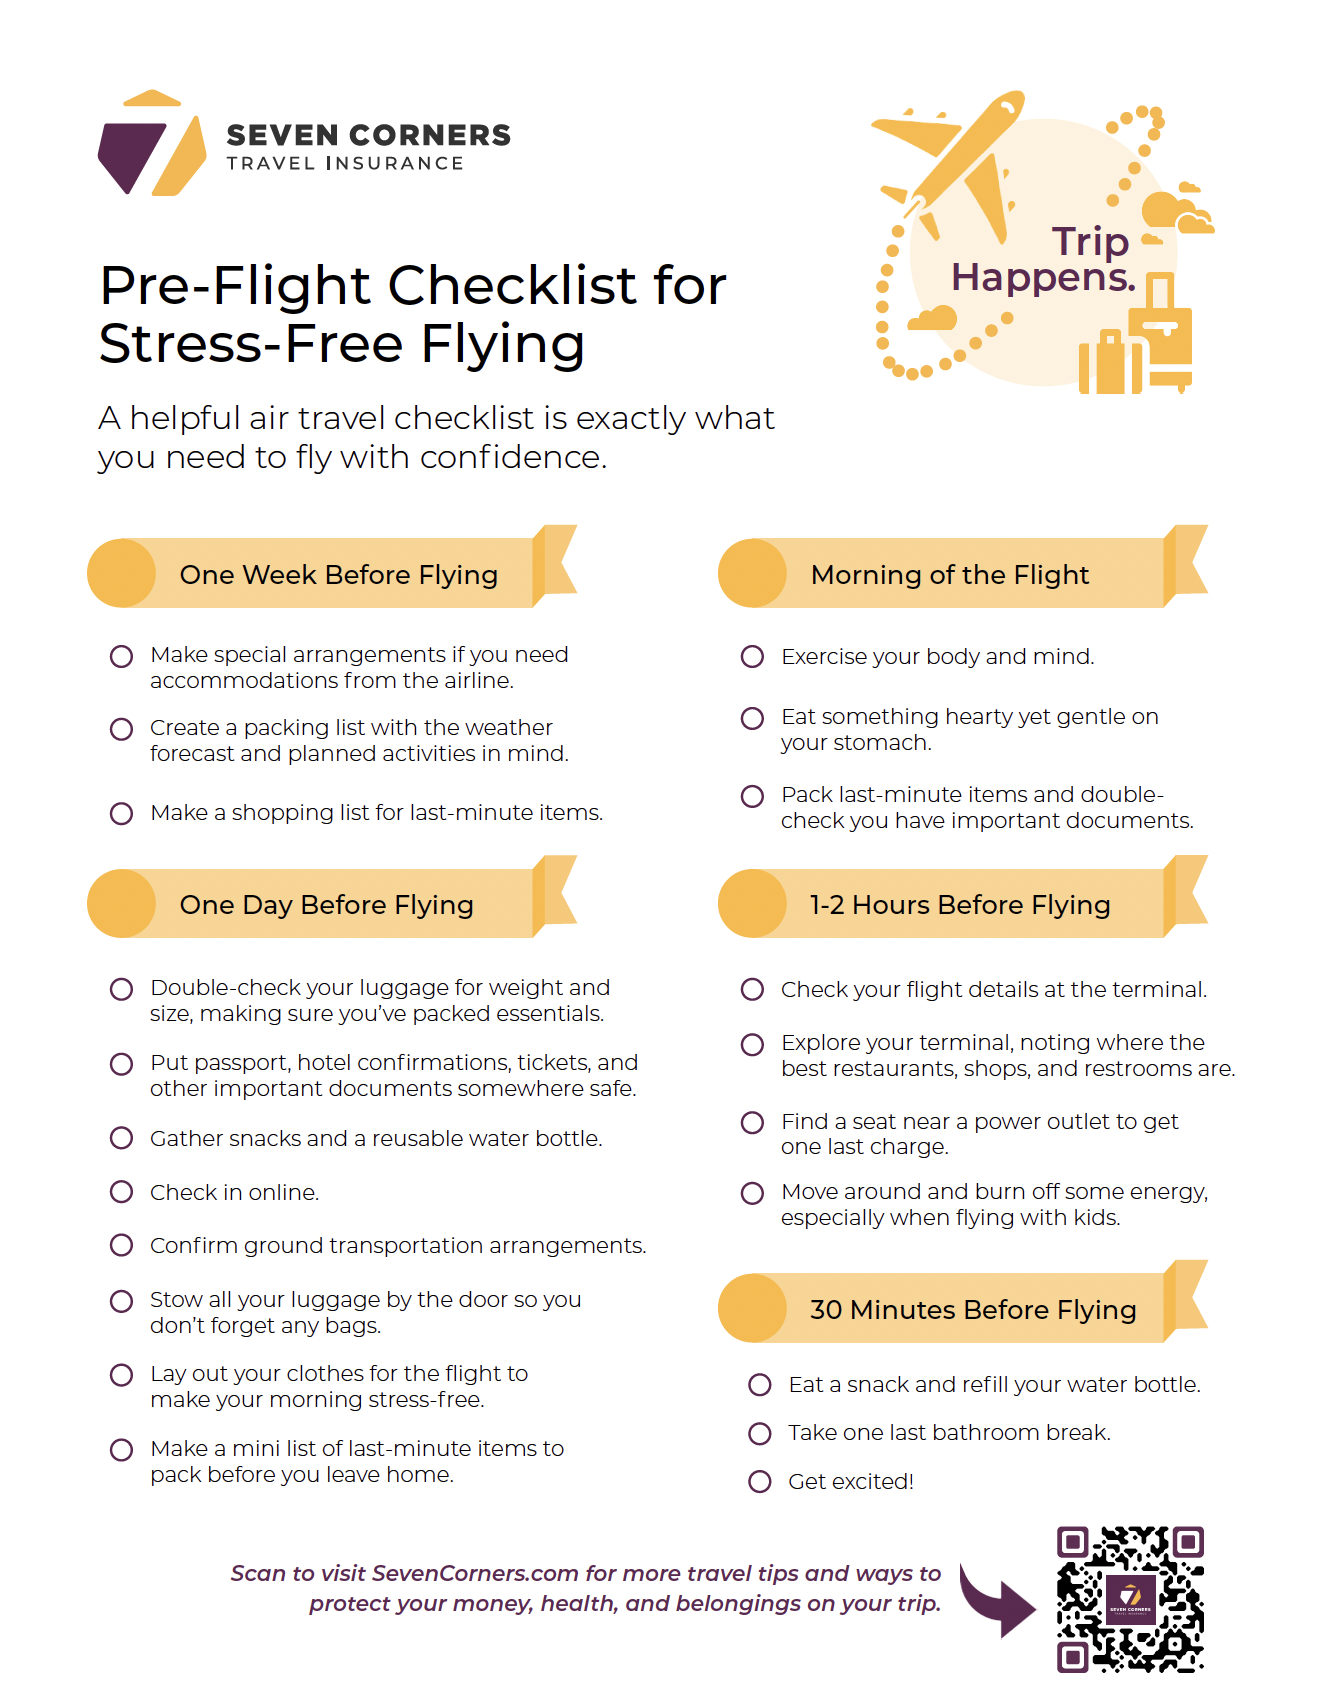 https://www.sevencorners.com/images/default-source/infographic/preview_pre-flight_checklist.png?sfvrsn=8168385e_1